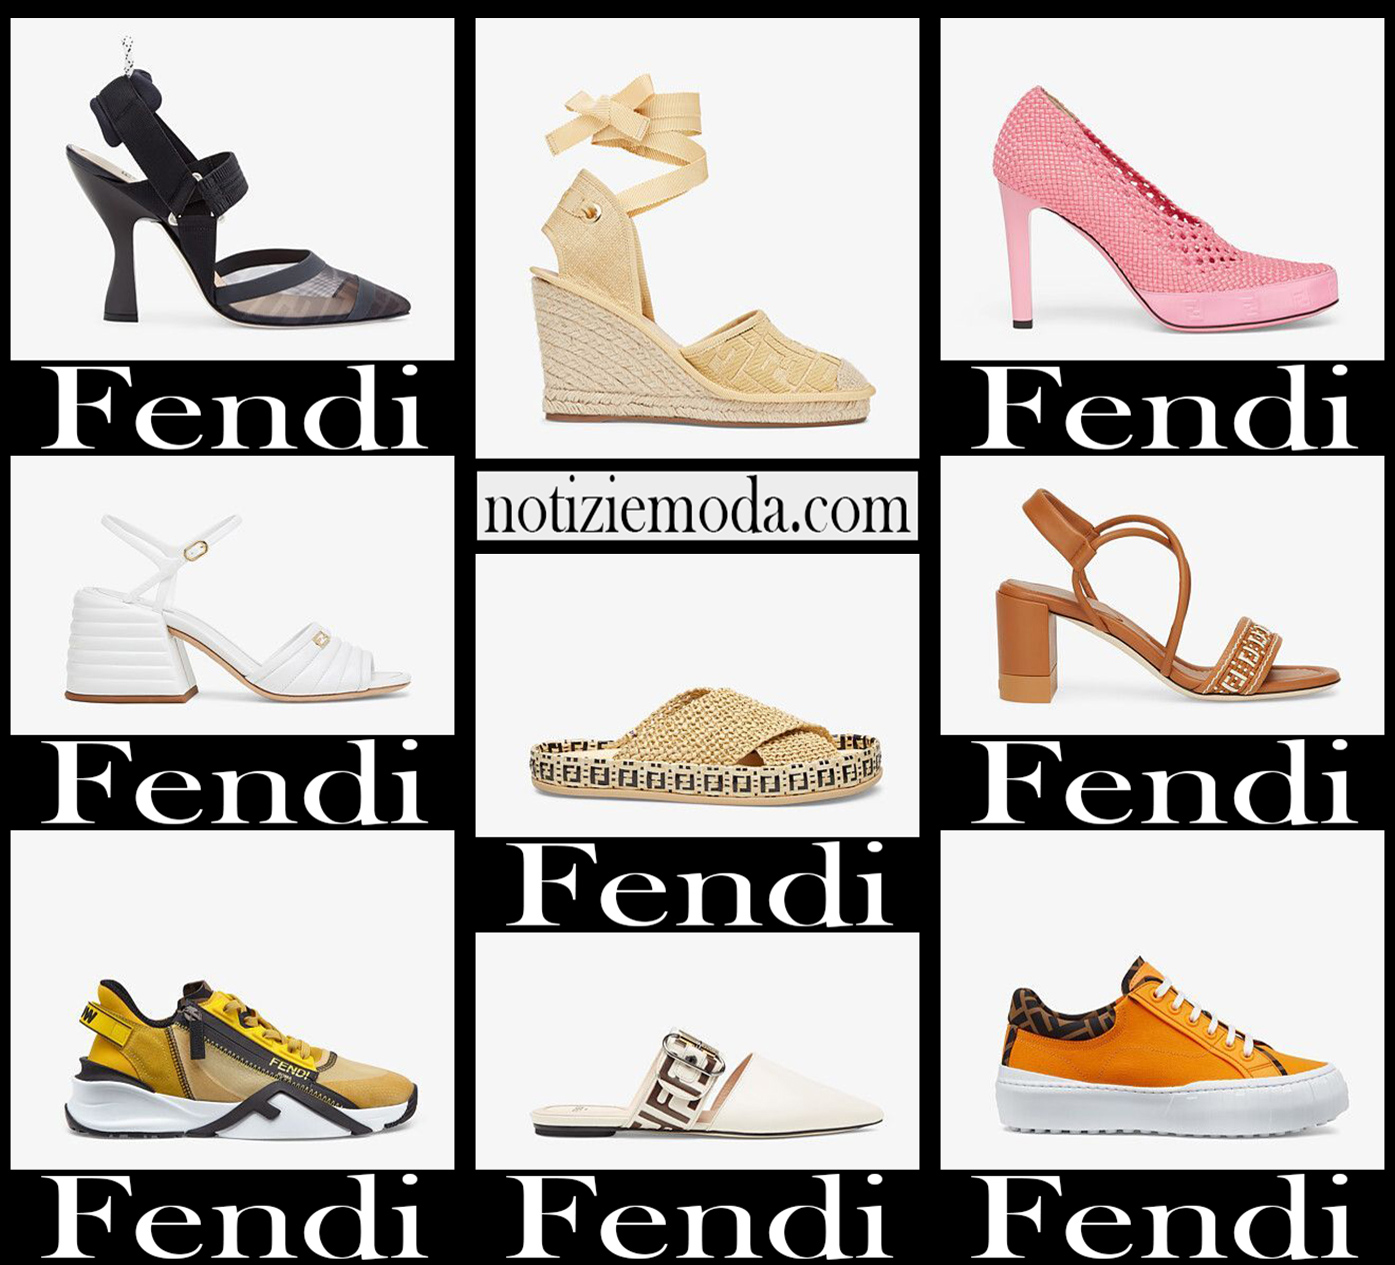 Nuovi arrivi scarpe Fendi 2021 calzature moda donna